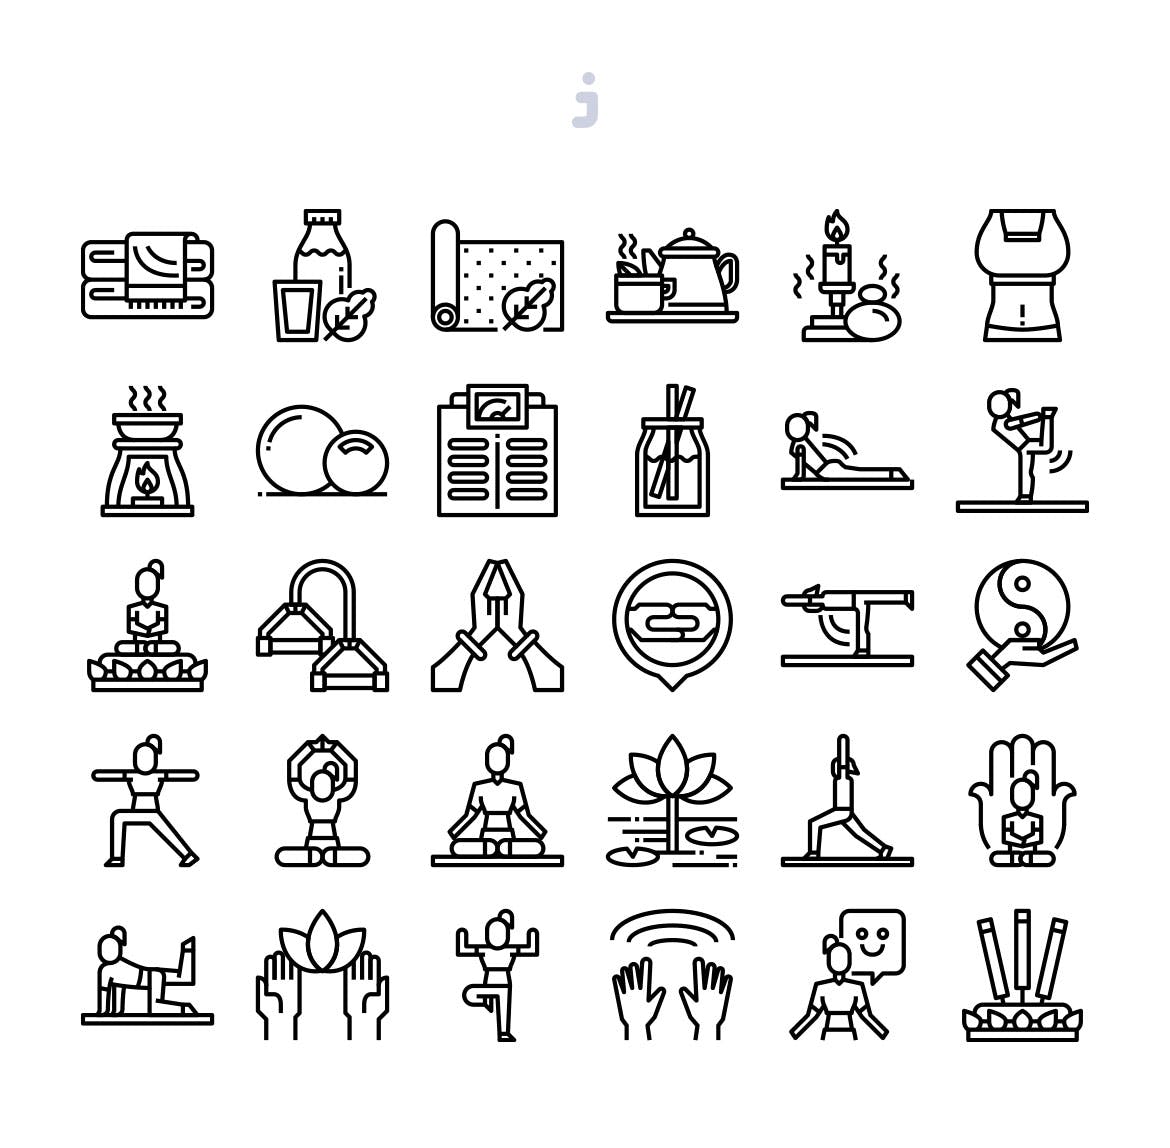 30枚瑜伽运动元素彩色矢量图标素材 30 Yoga Element Icons插图(2)